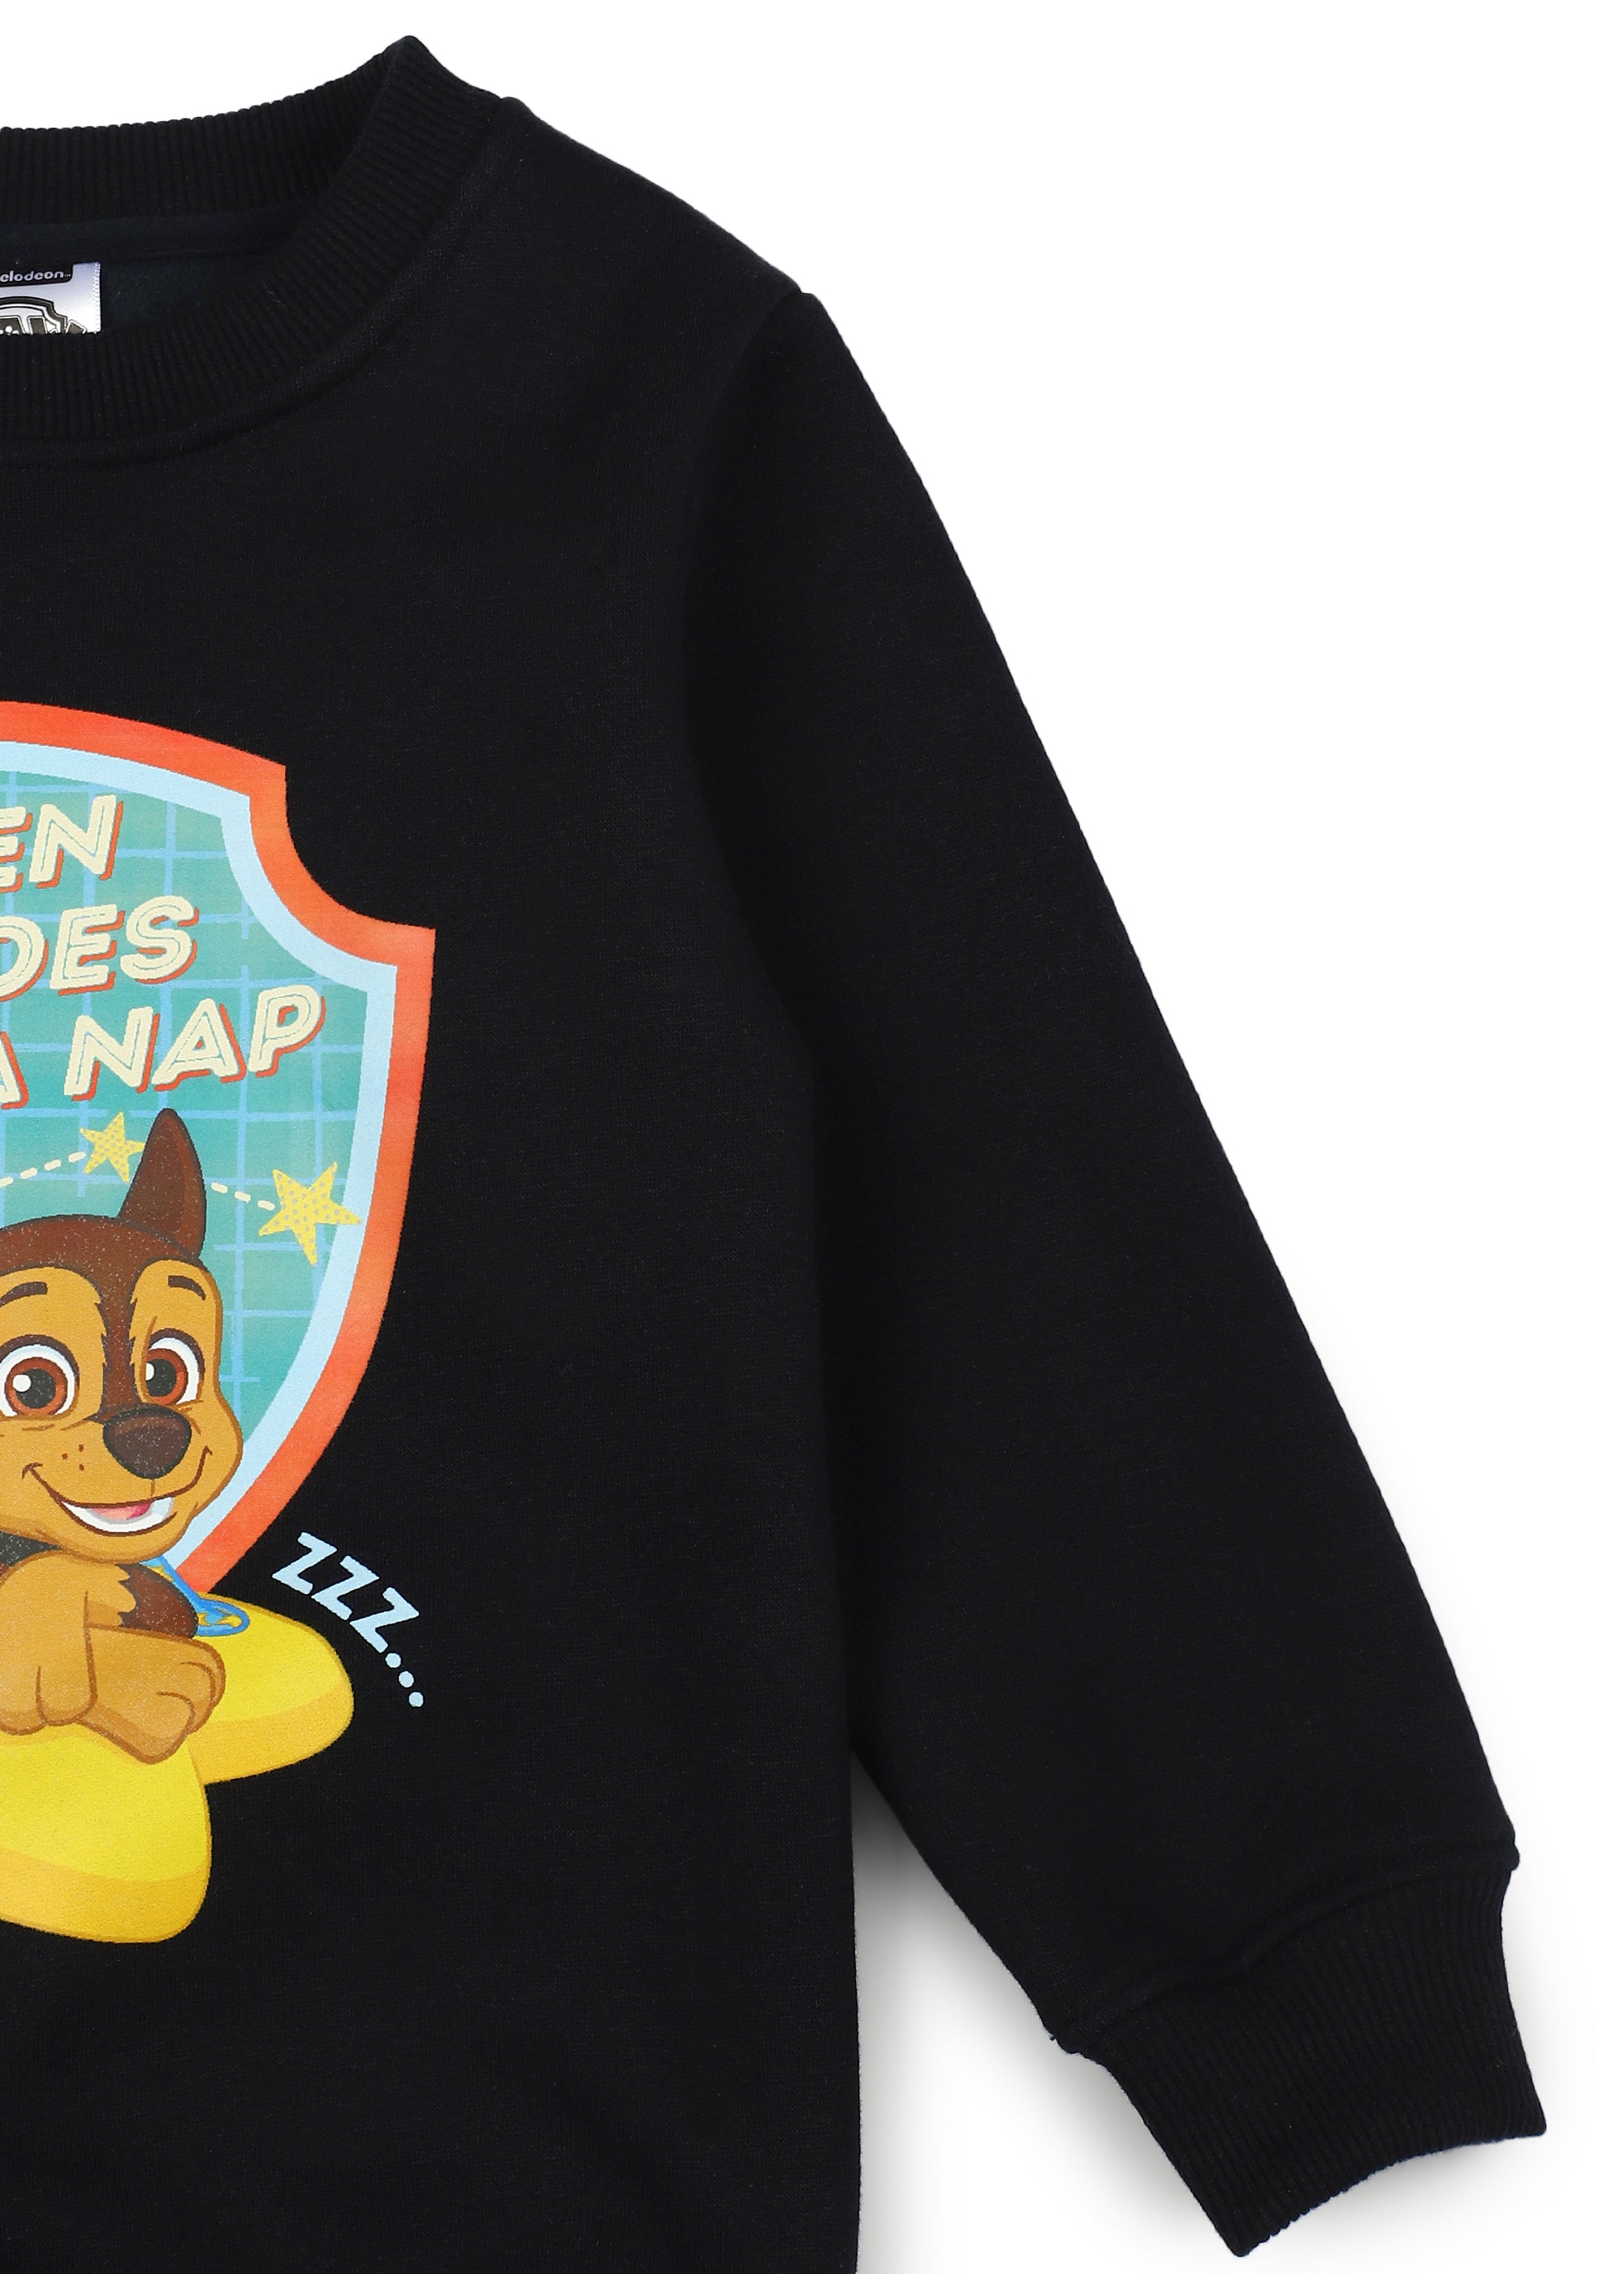 Paw Patrol Heroes Print Cotton Fleece Kids Sweatshirt Set - Shopbloom